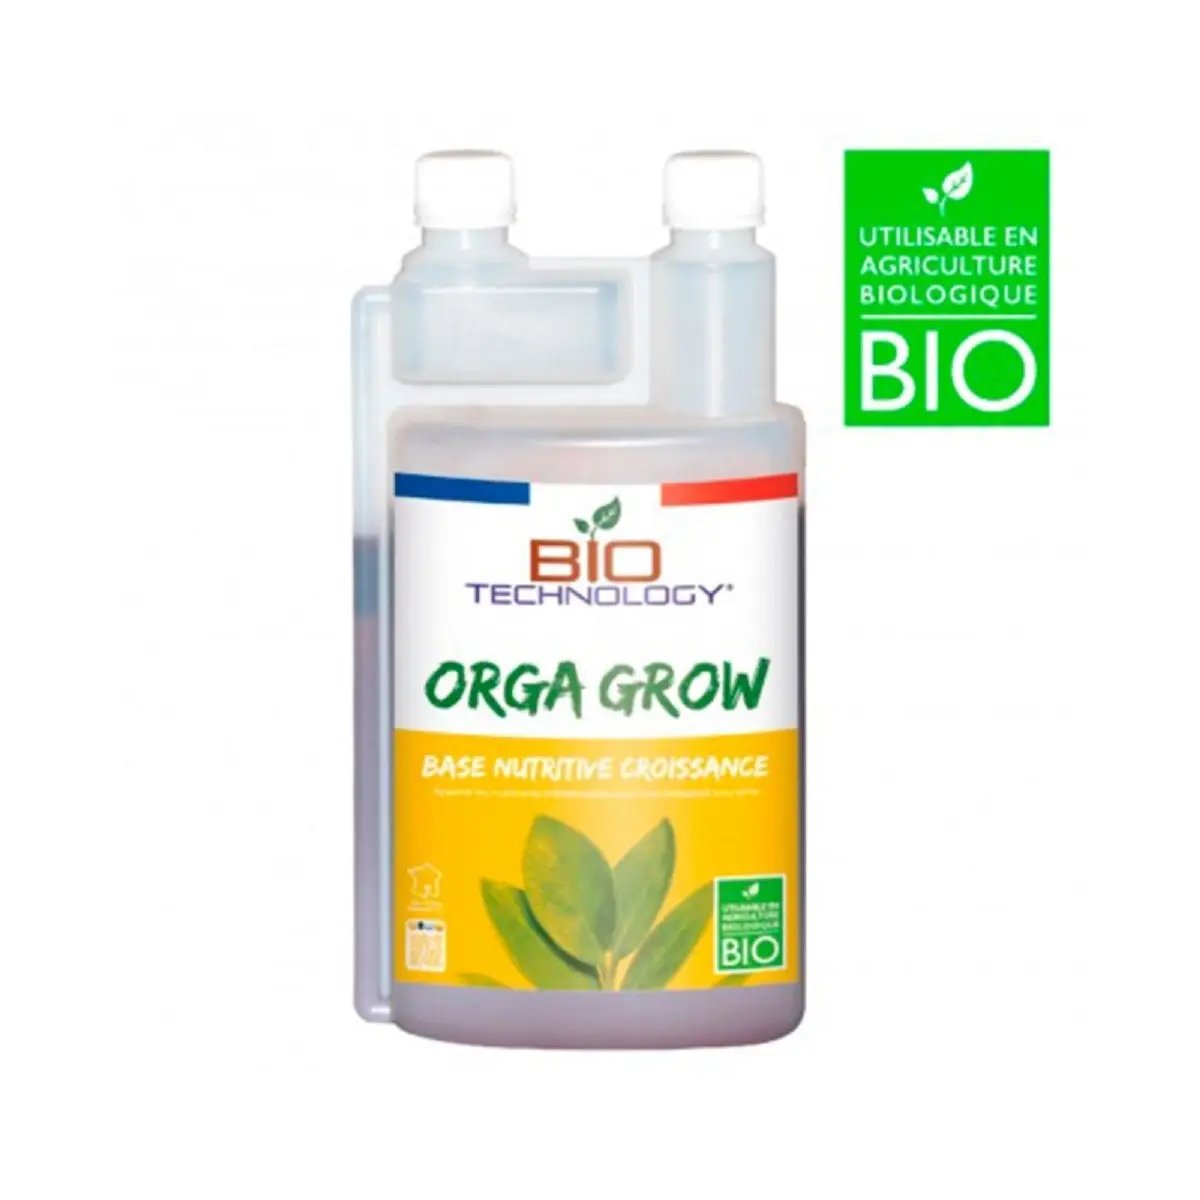 Engrais de croissance organique Bio Technology Orga Grow 1 litre